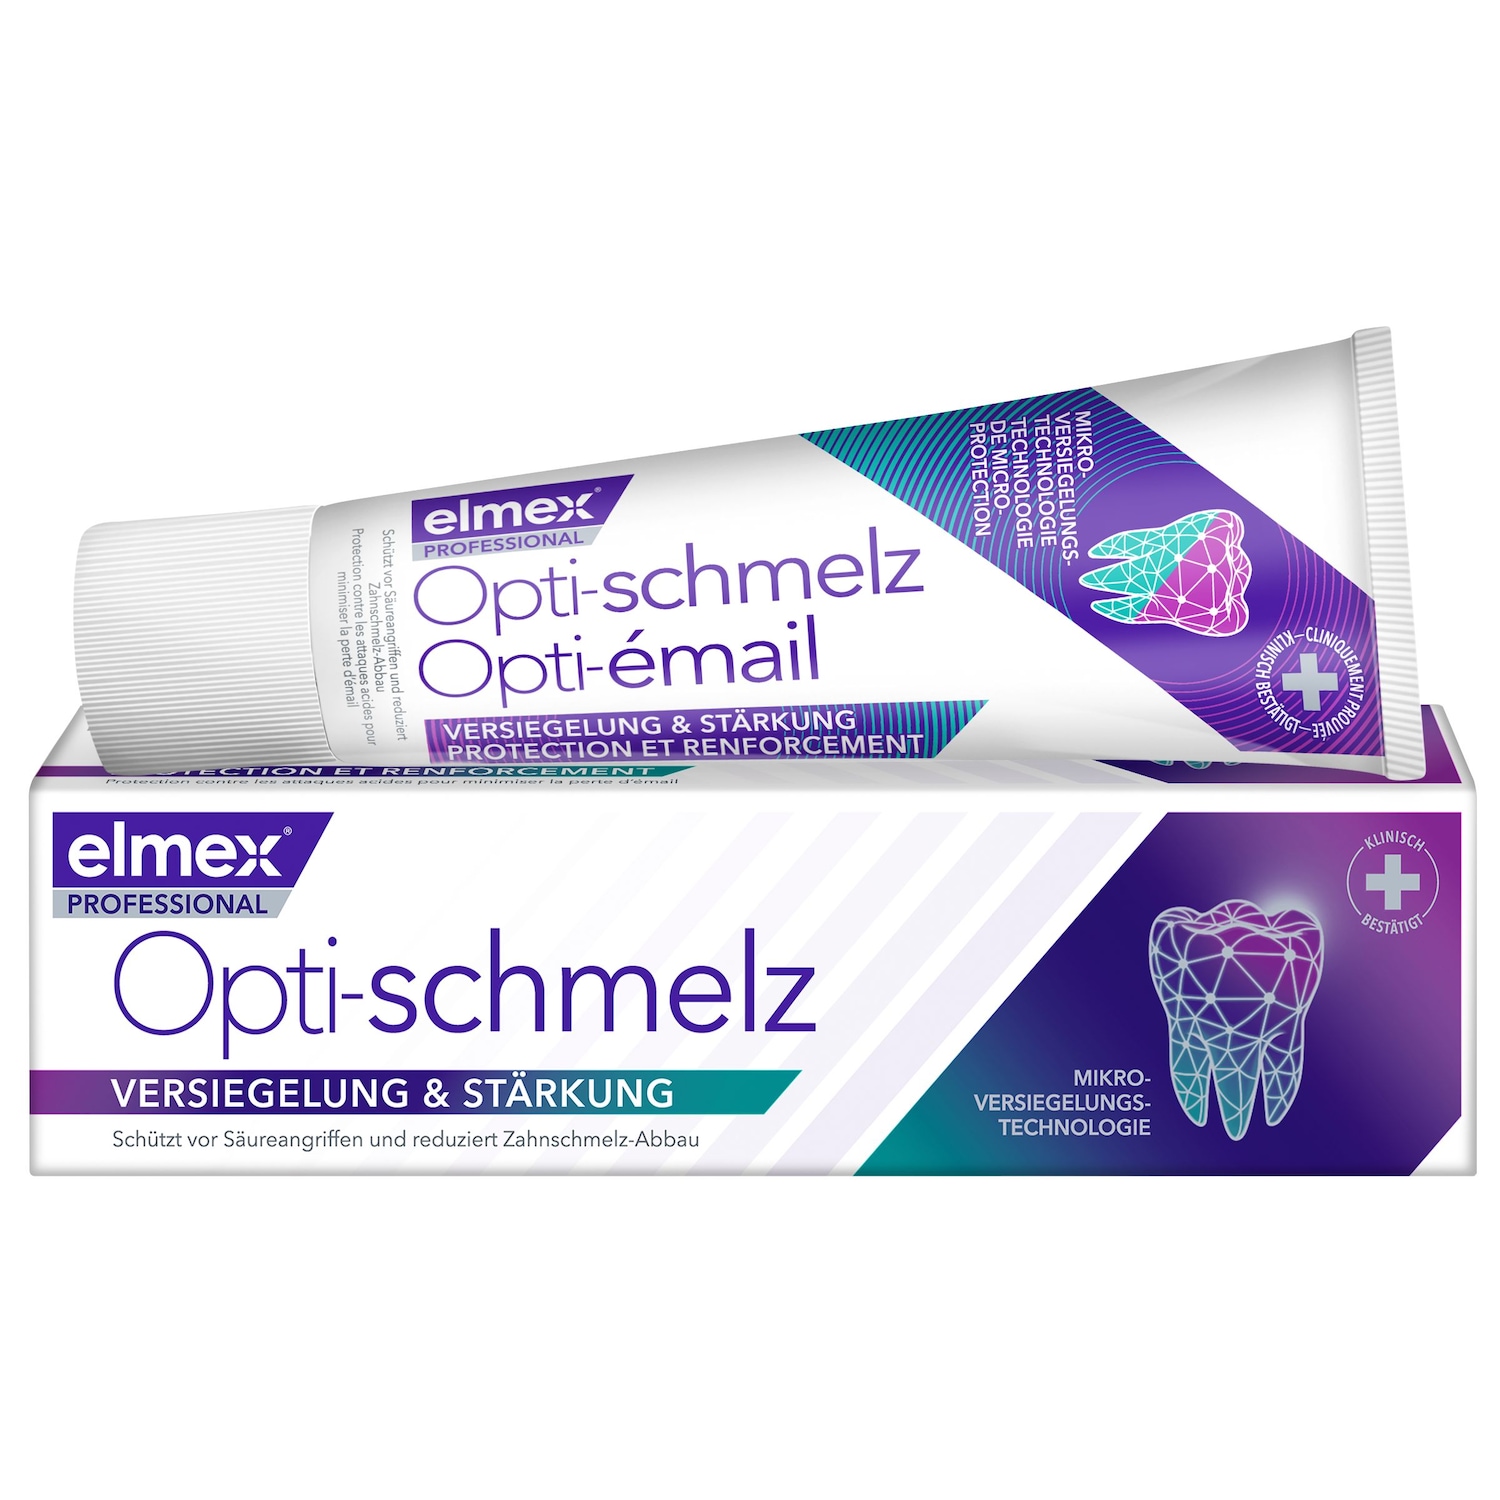 Elmex Opti-schmelz Professional Toothpaste